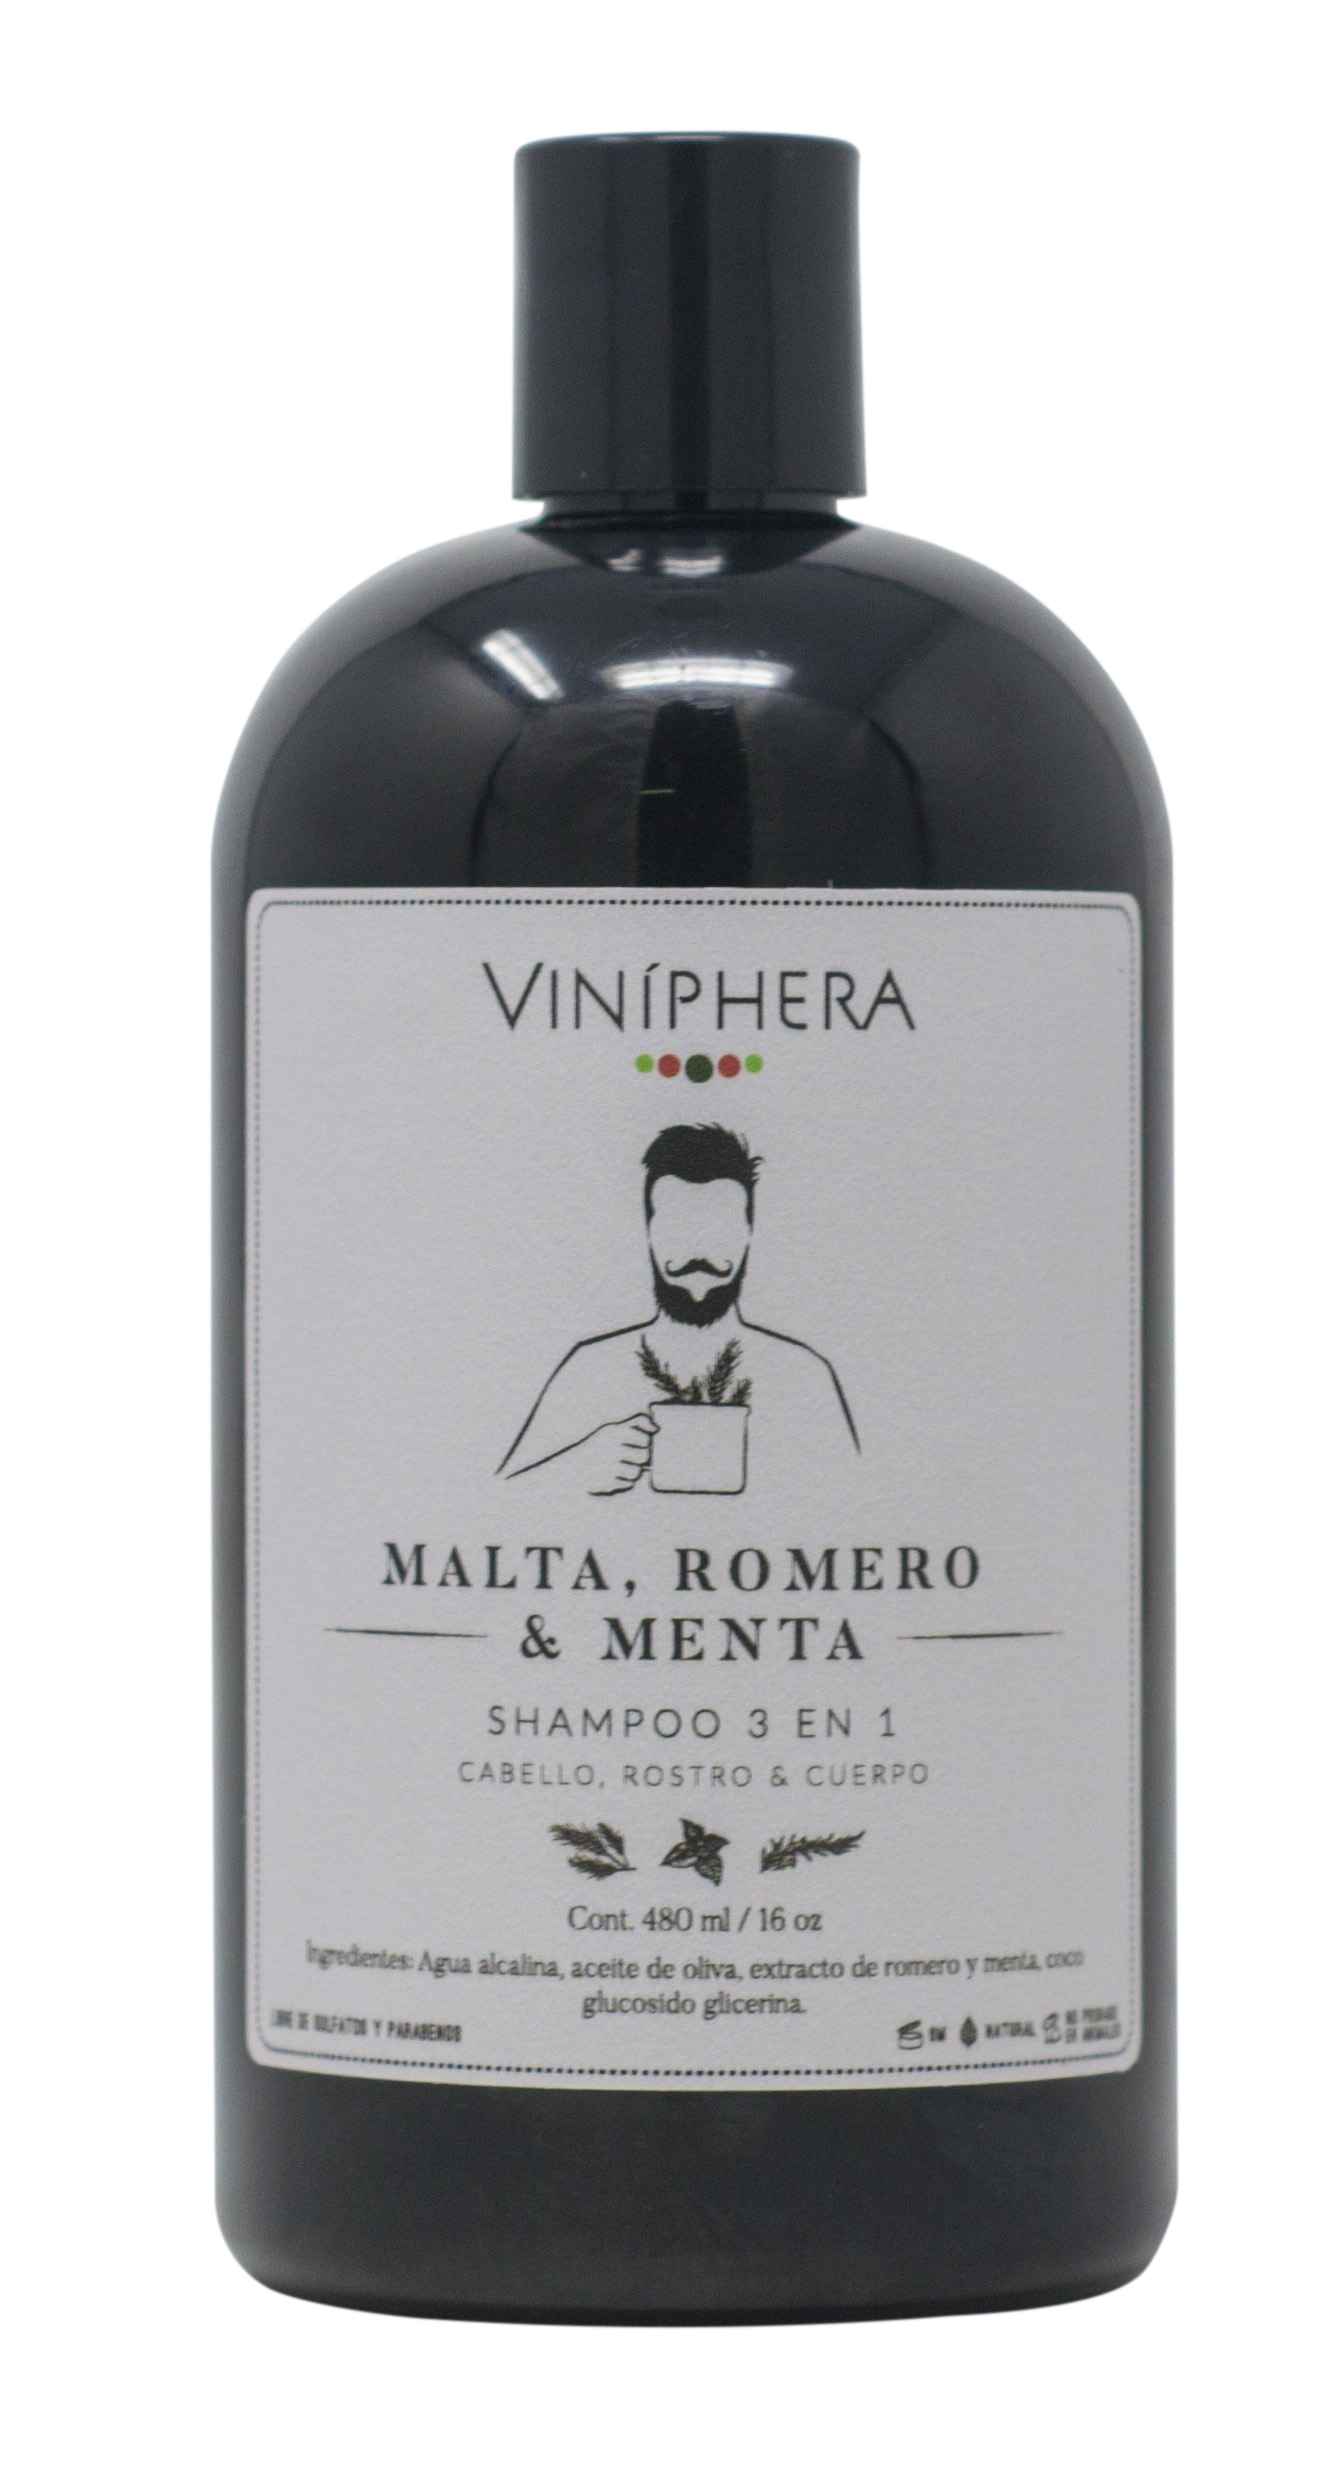 Shampoo Malta & Romero 480ml / 16oz